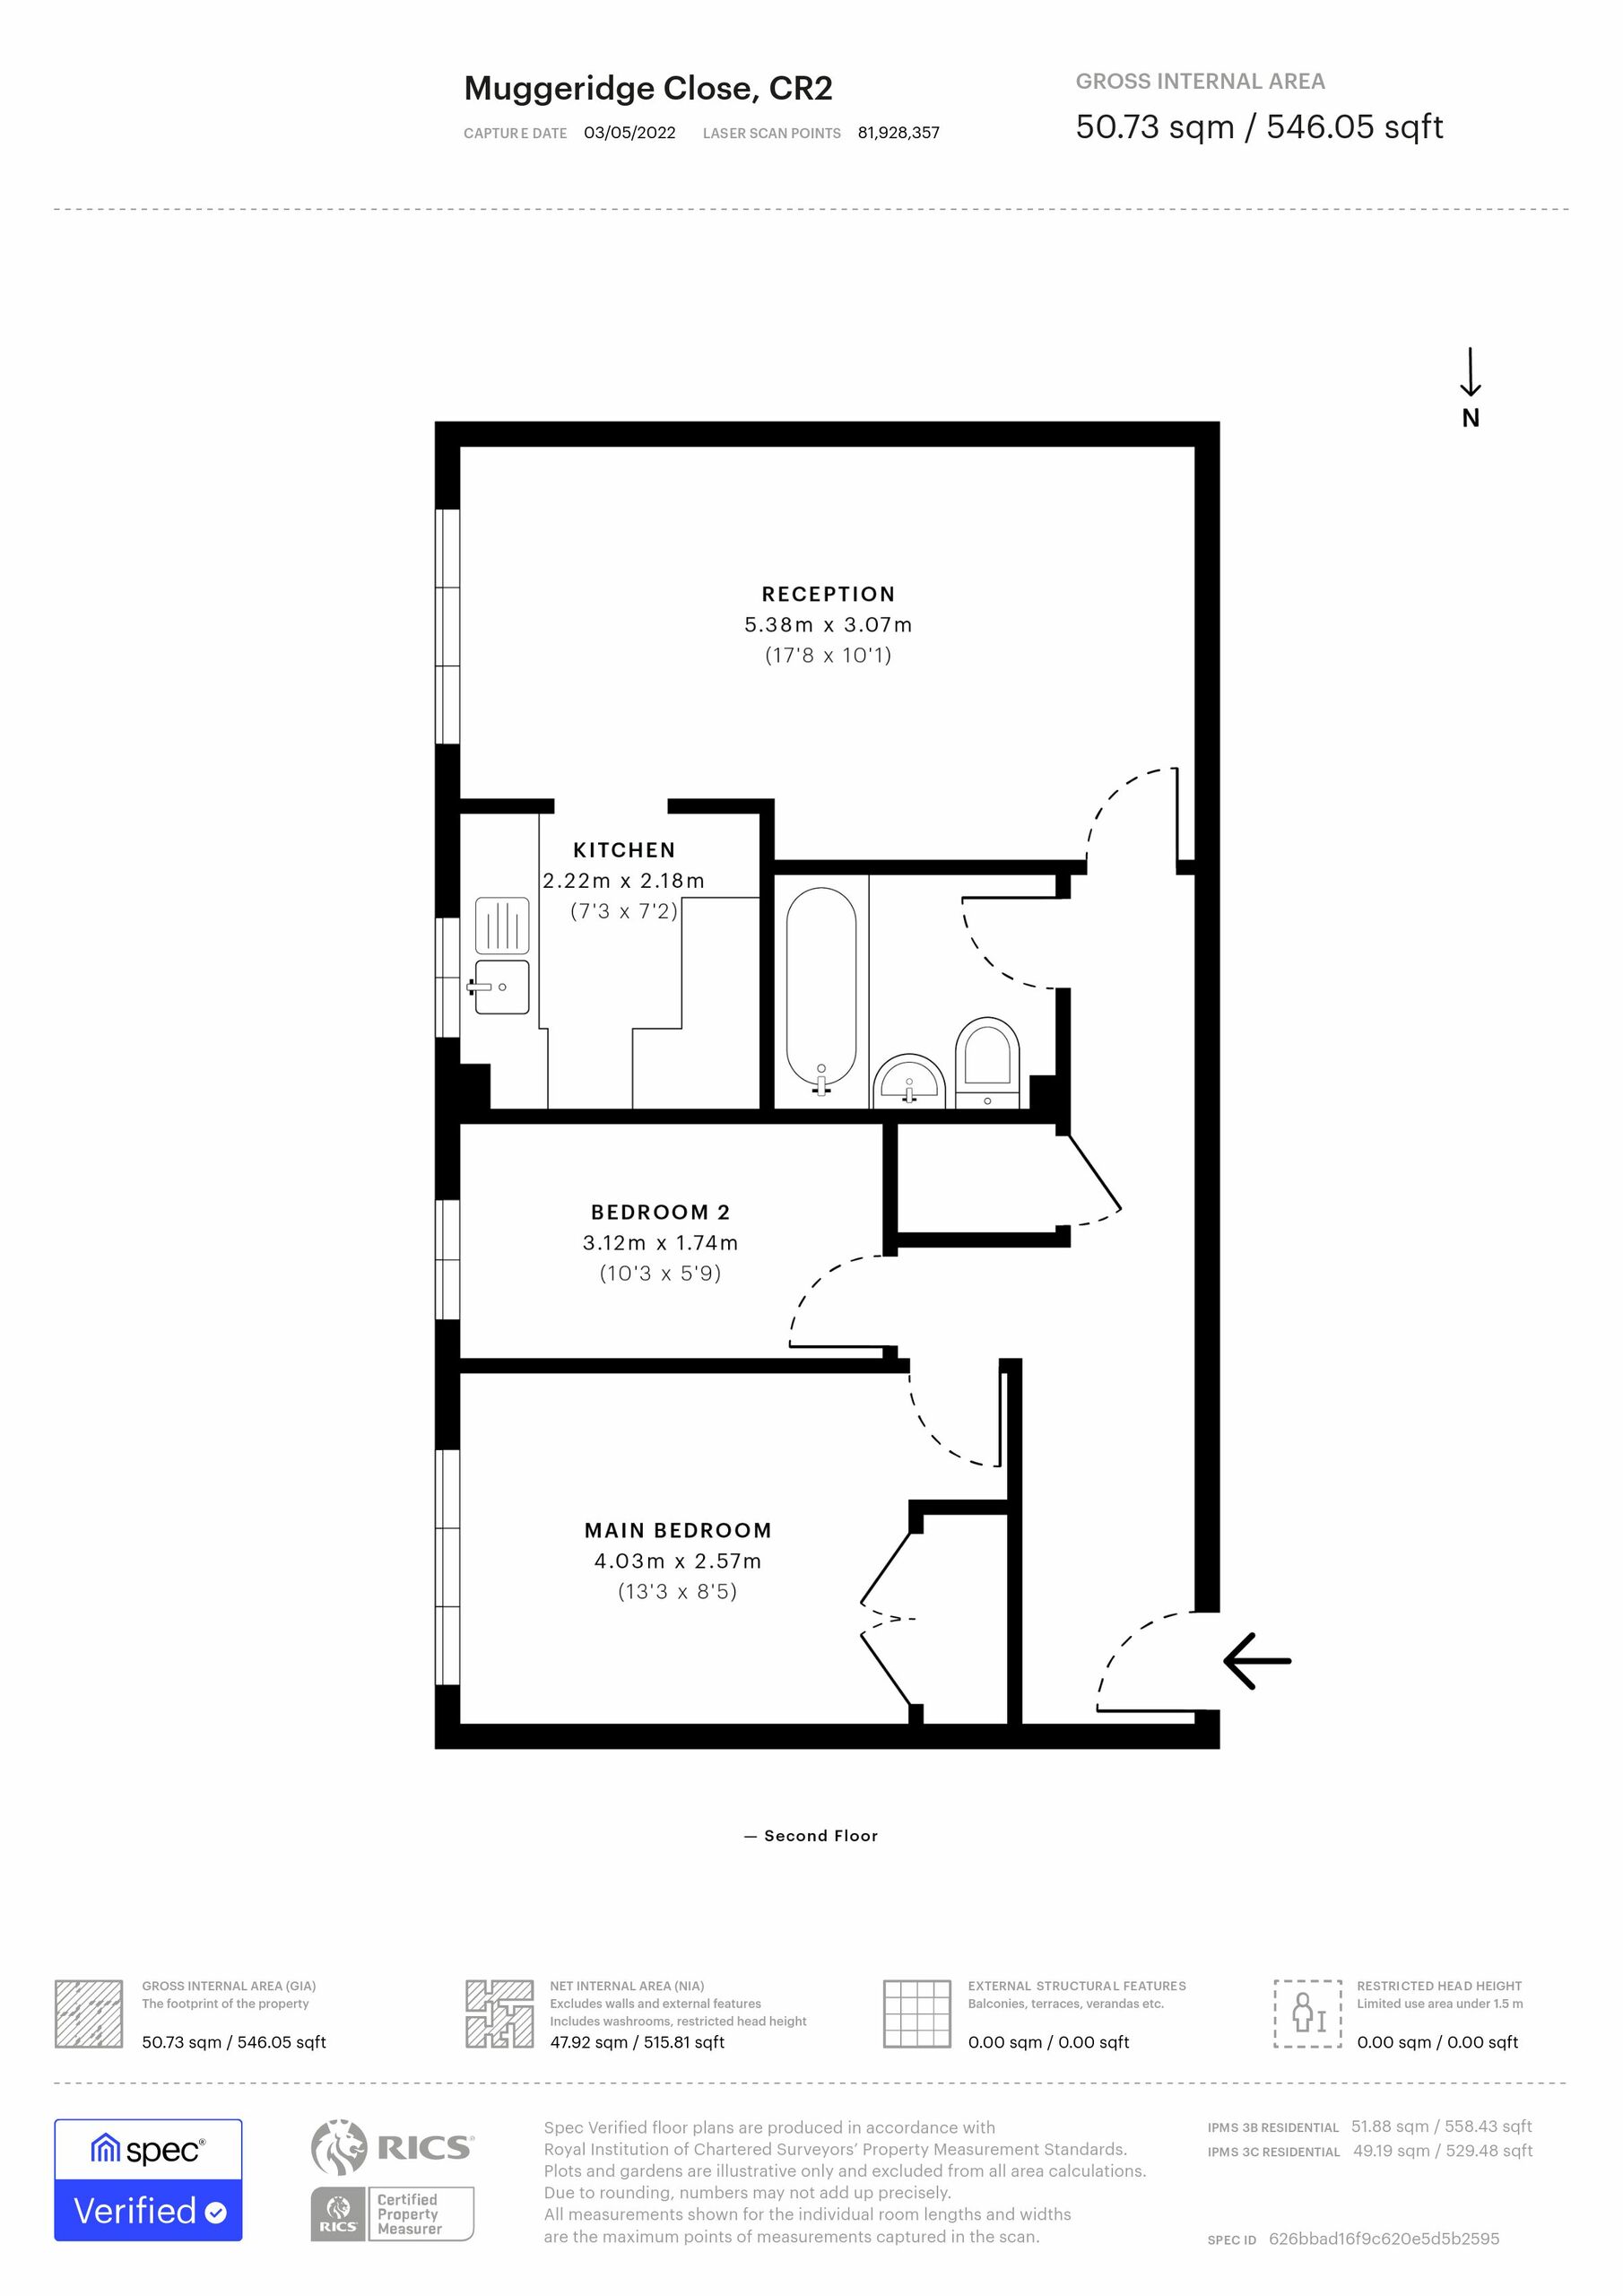 2 bed apartment to rent in Muggeridge Close, South Croydon - Property floorplan